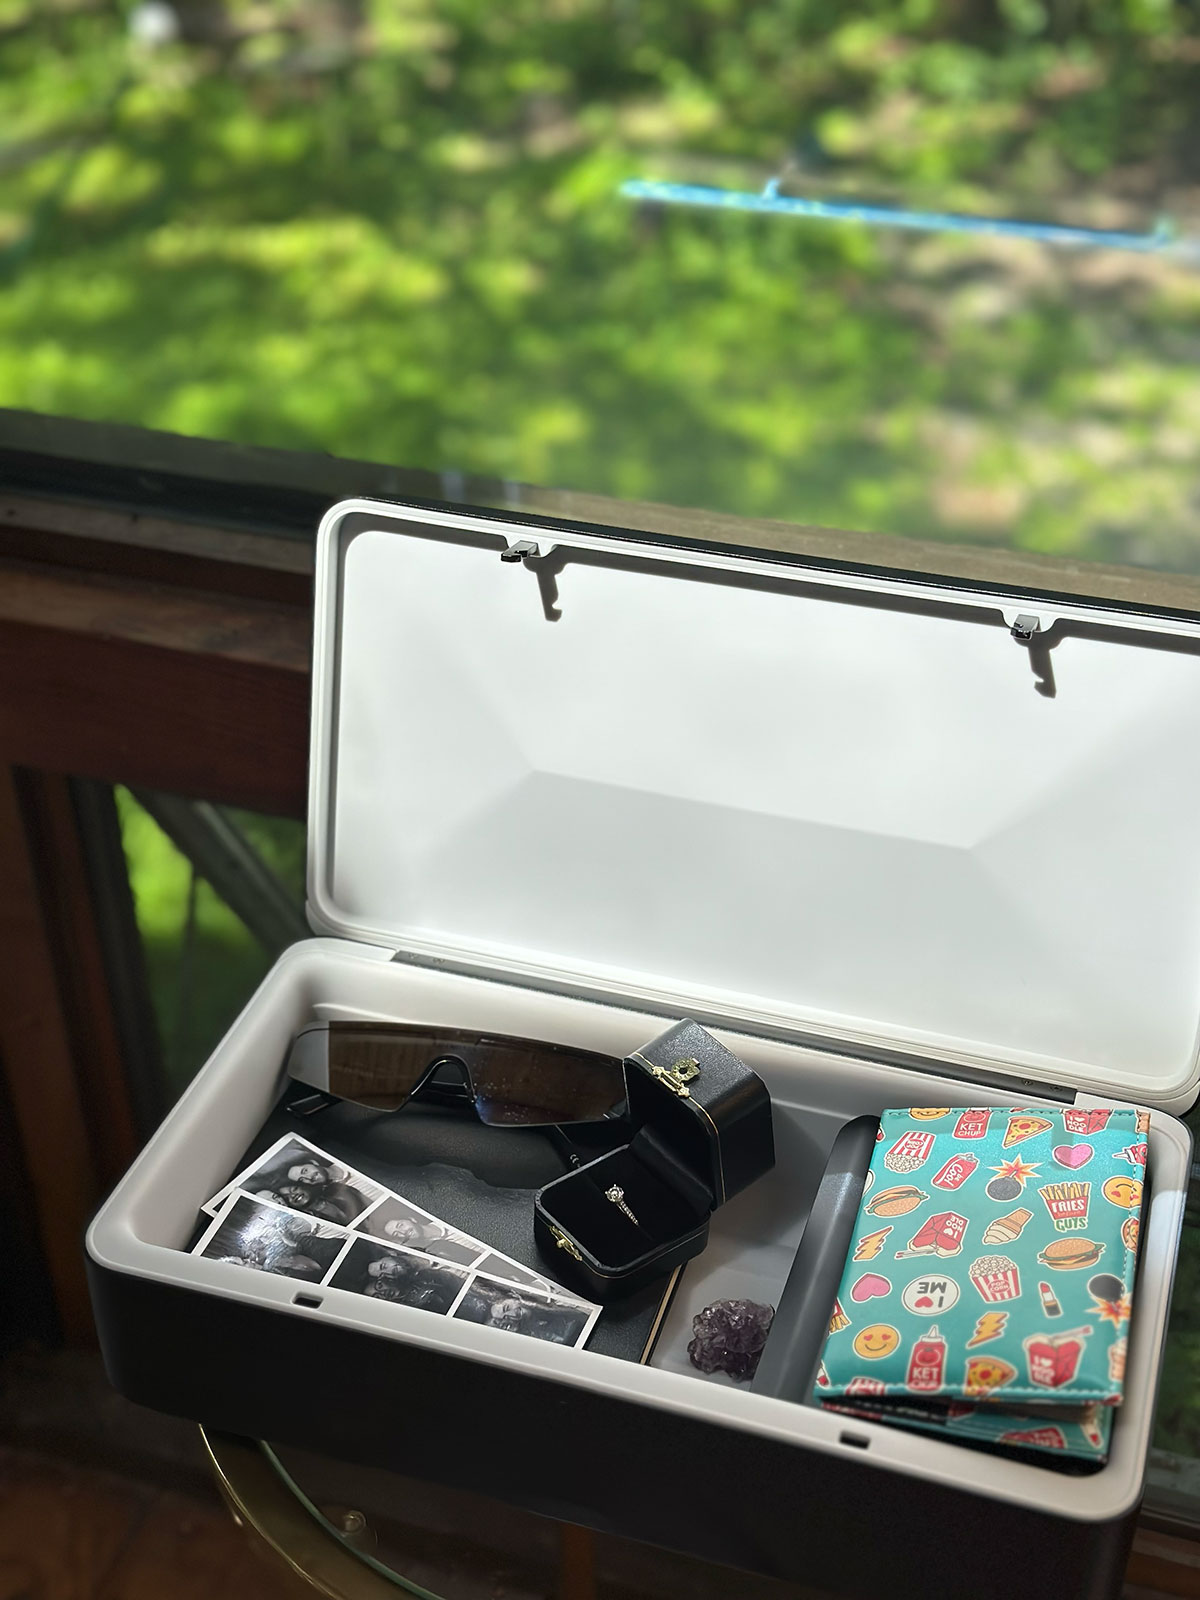 A TROVA safe with valuables and memorabilia inside